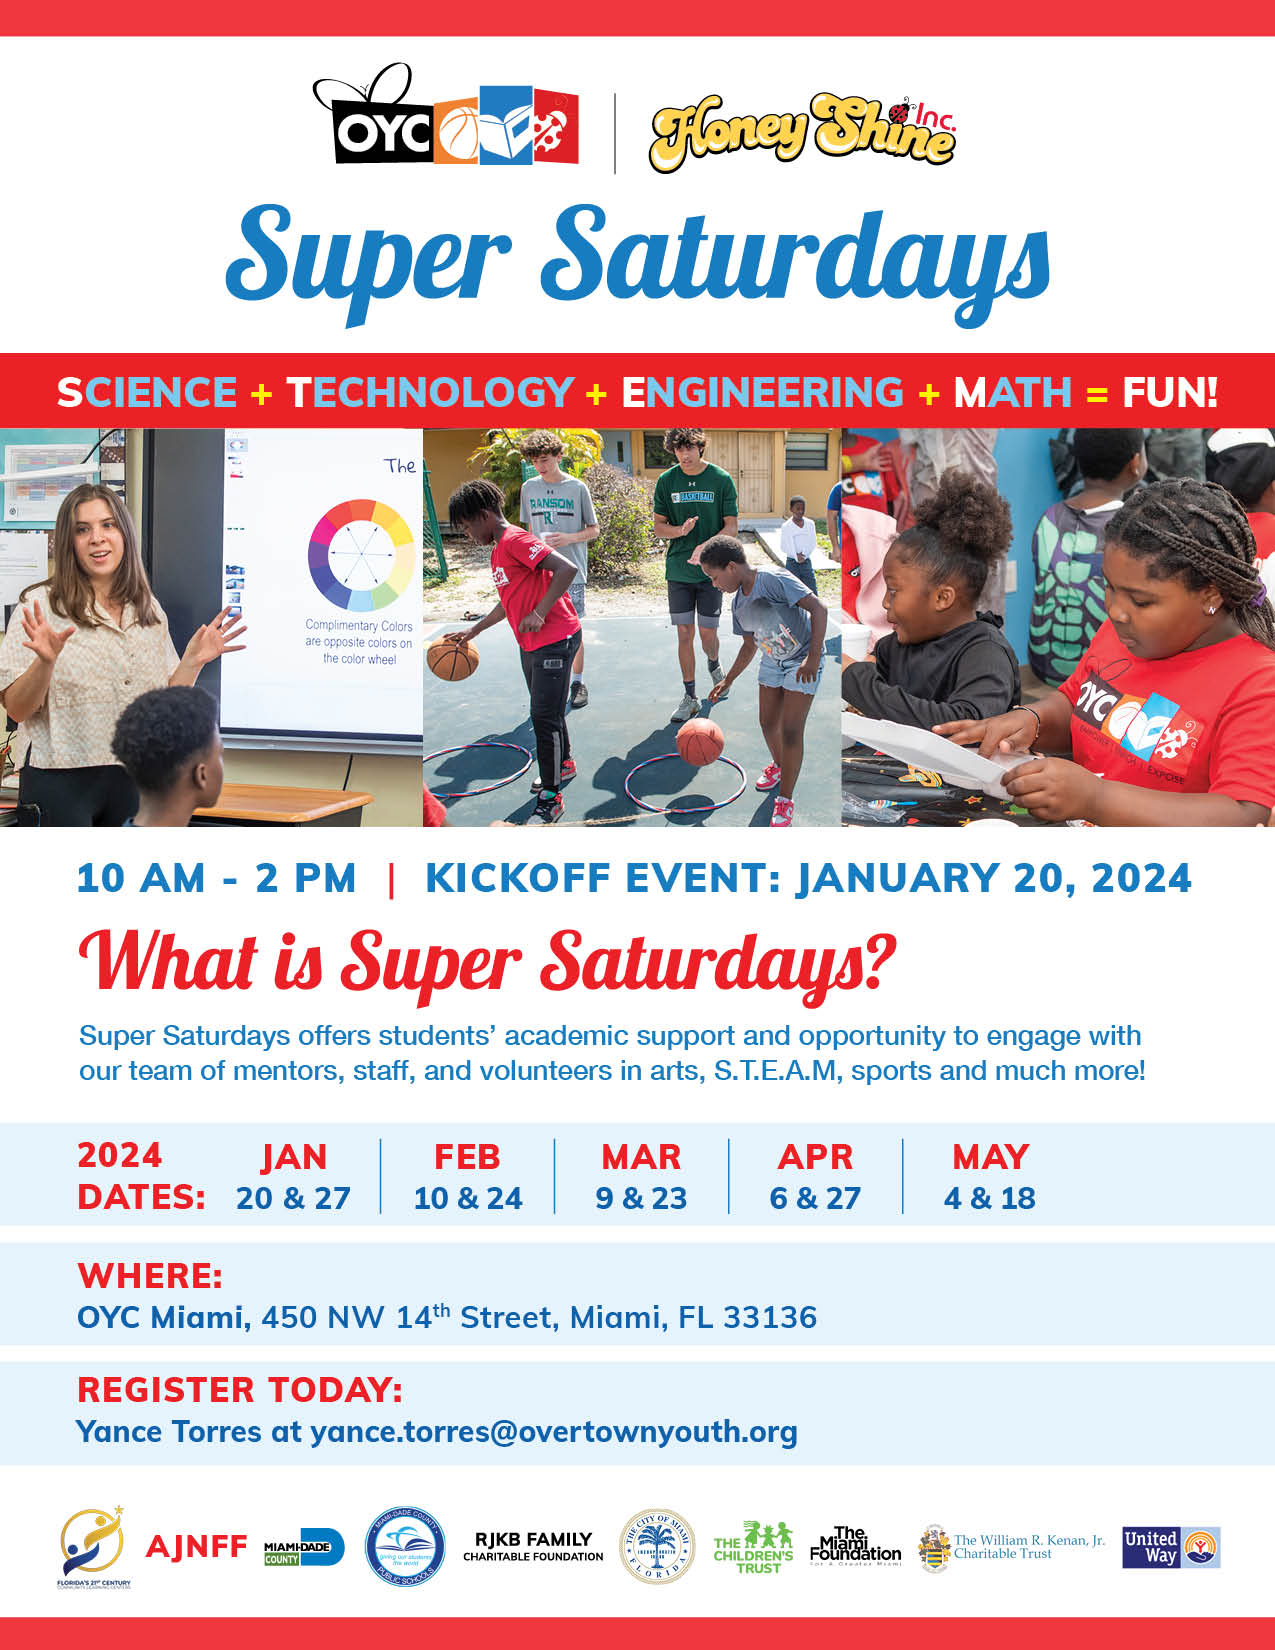 Super Saturdays schedule for Jan-May 2024